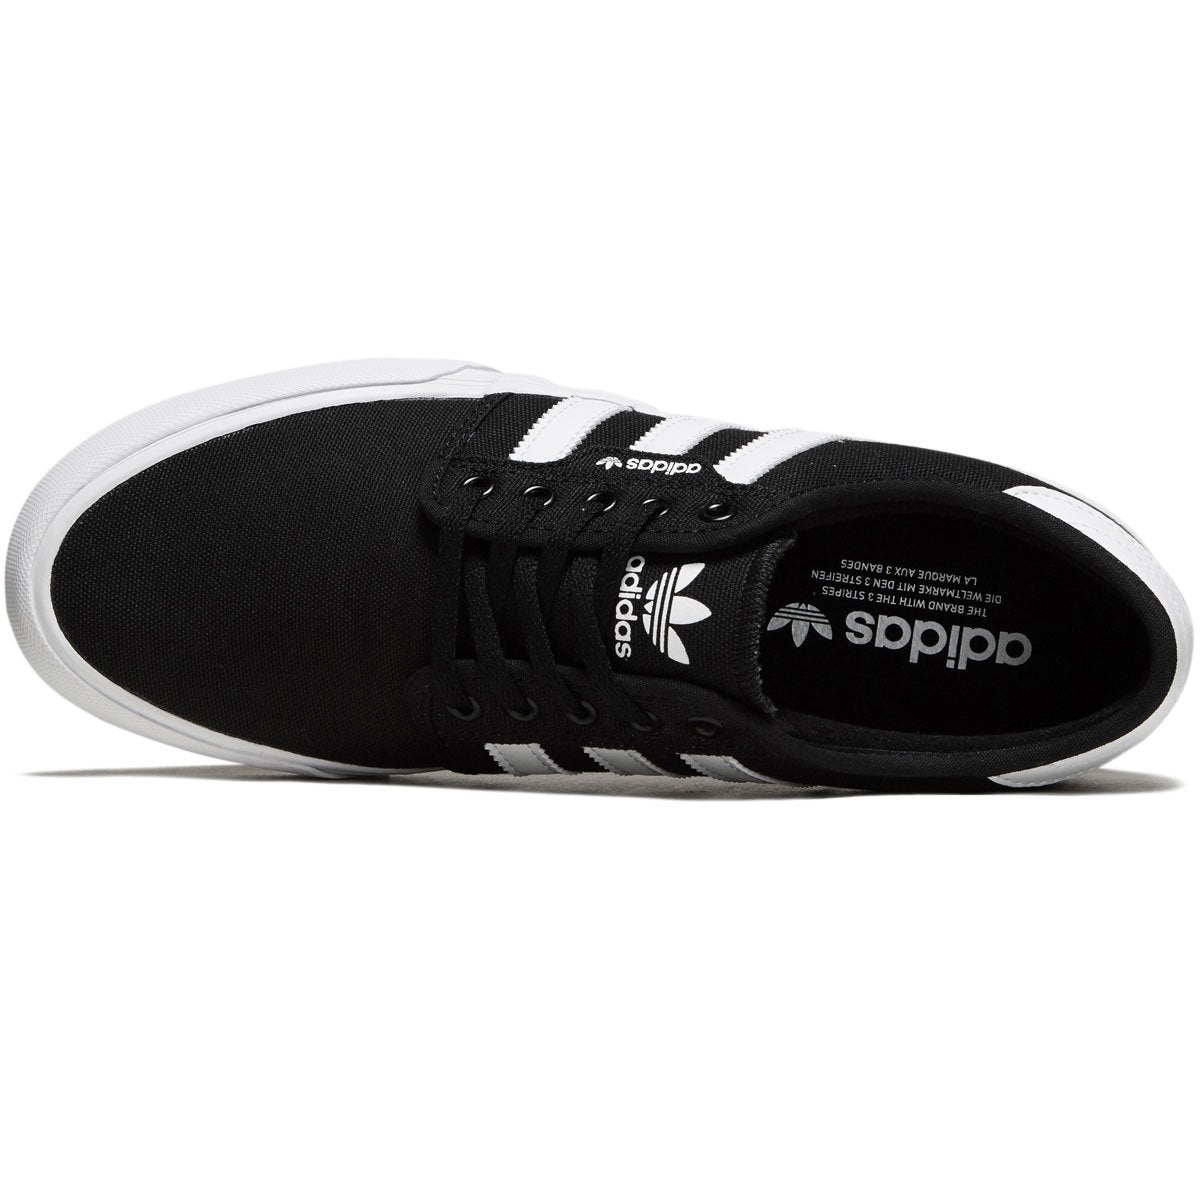 Adidas Seeley Xt Shoes - Core Black/White/White image 3